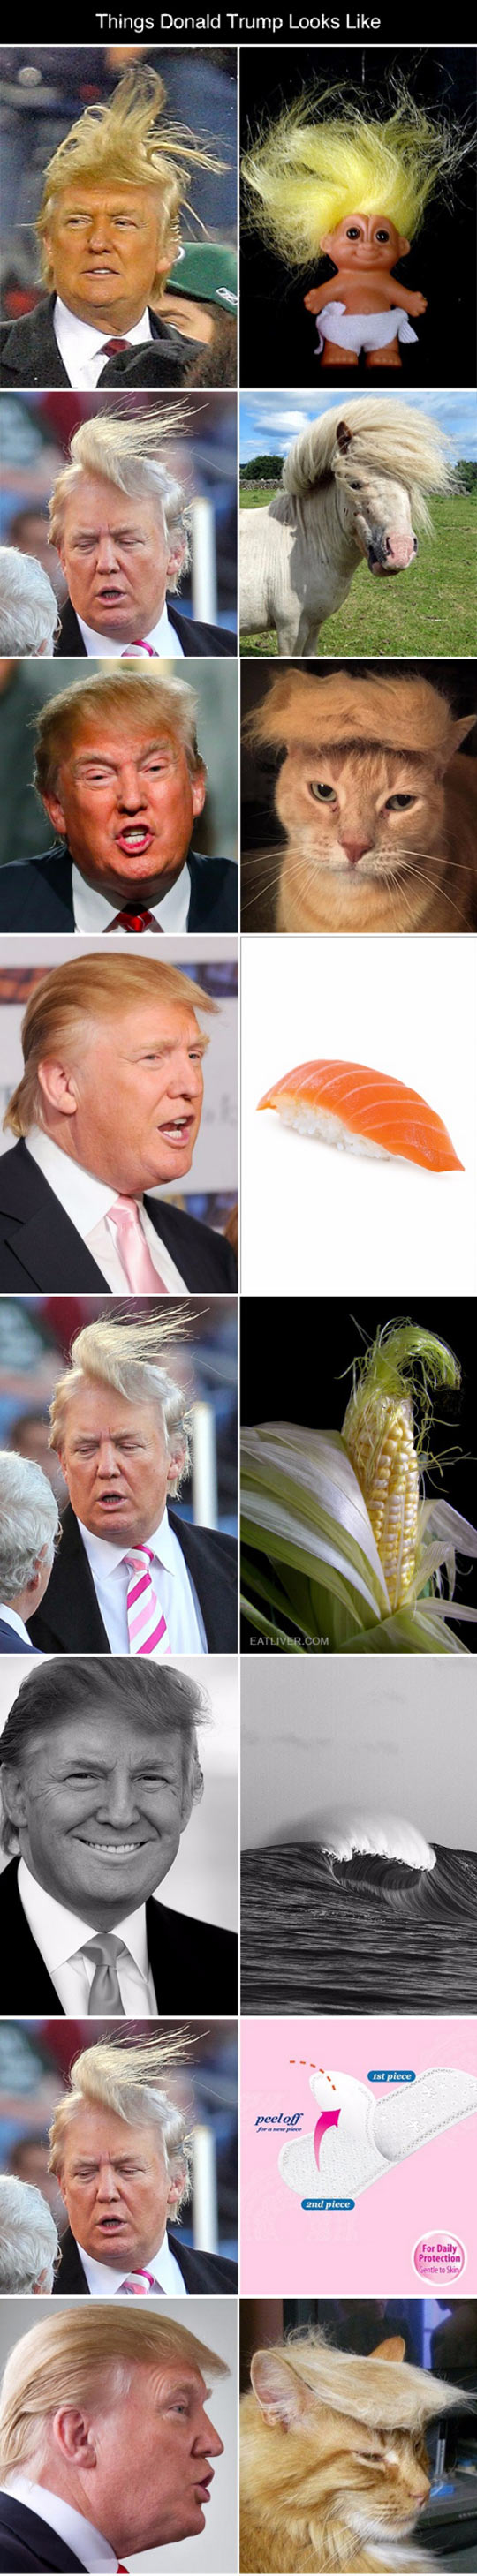 funny-Donald-Trump-hair-looking-like-things.jpg